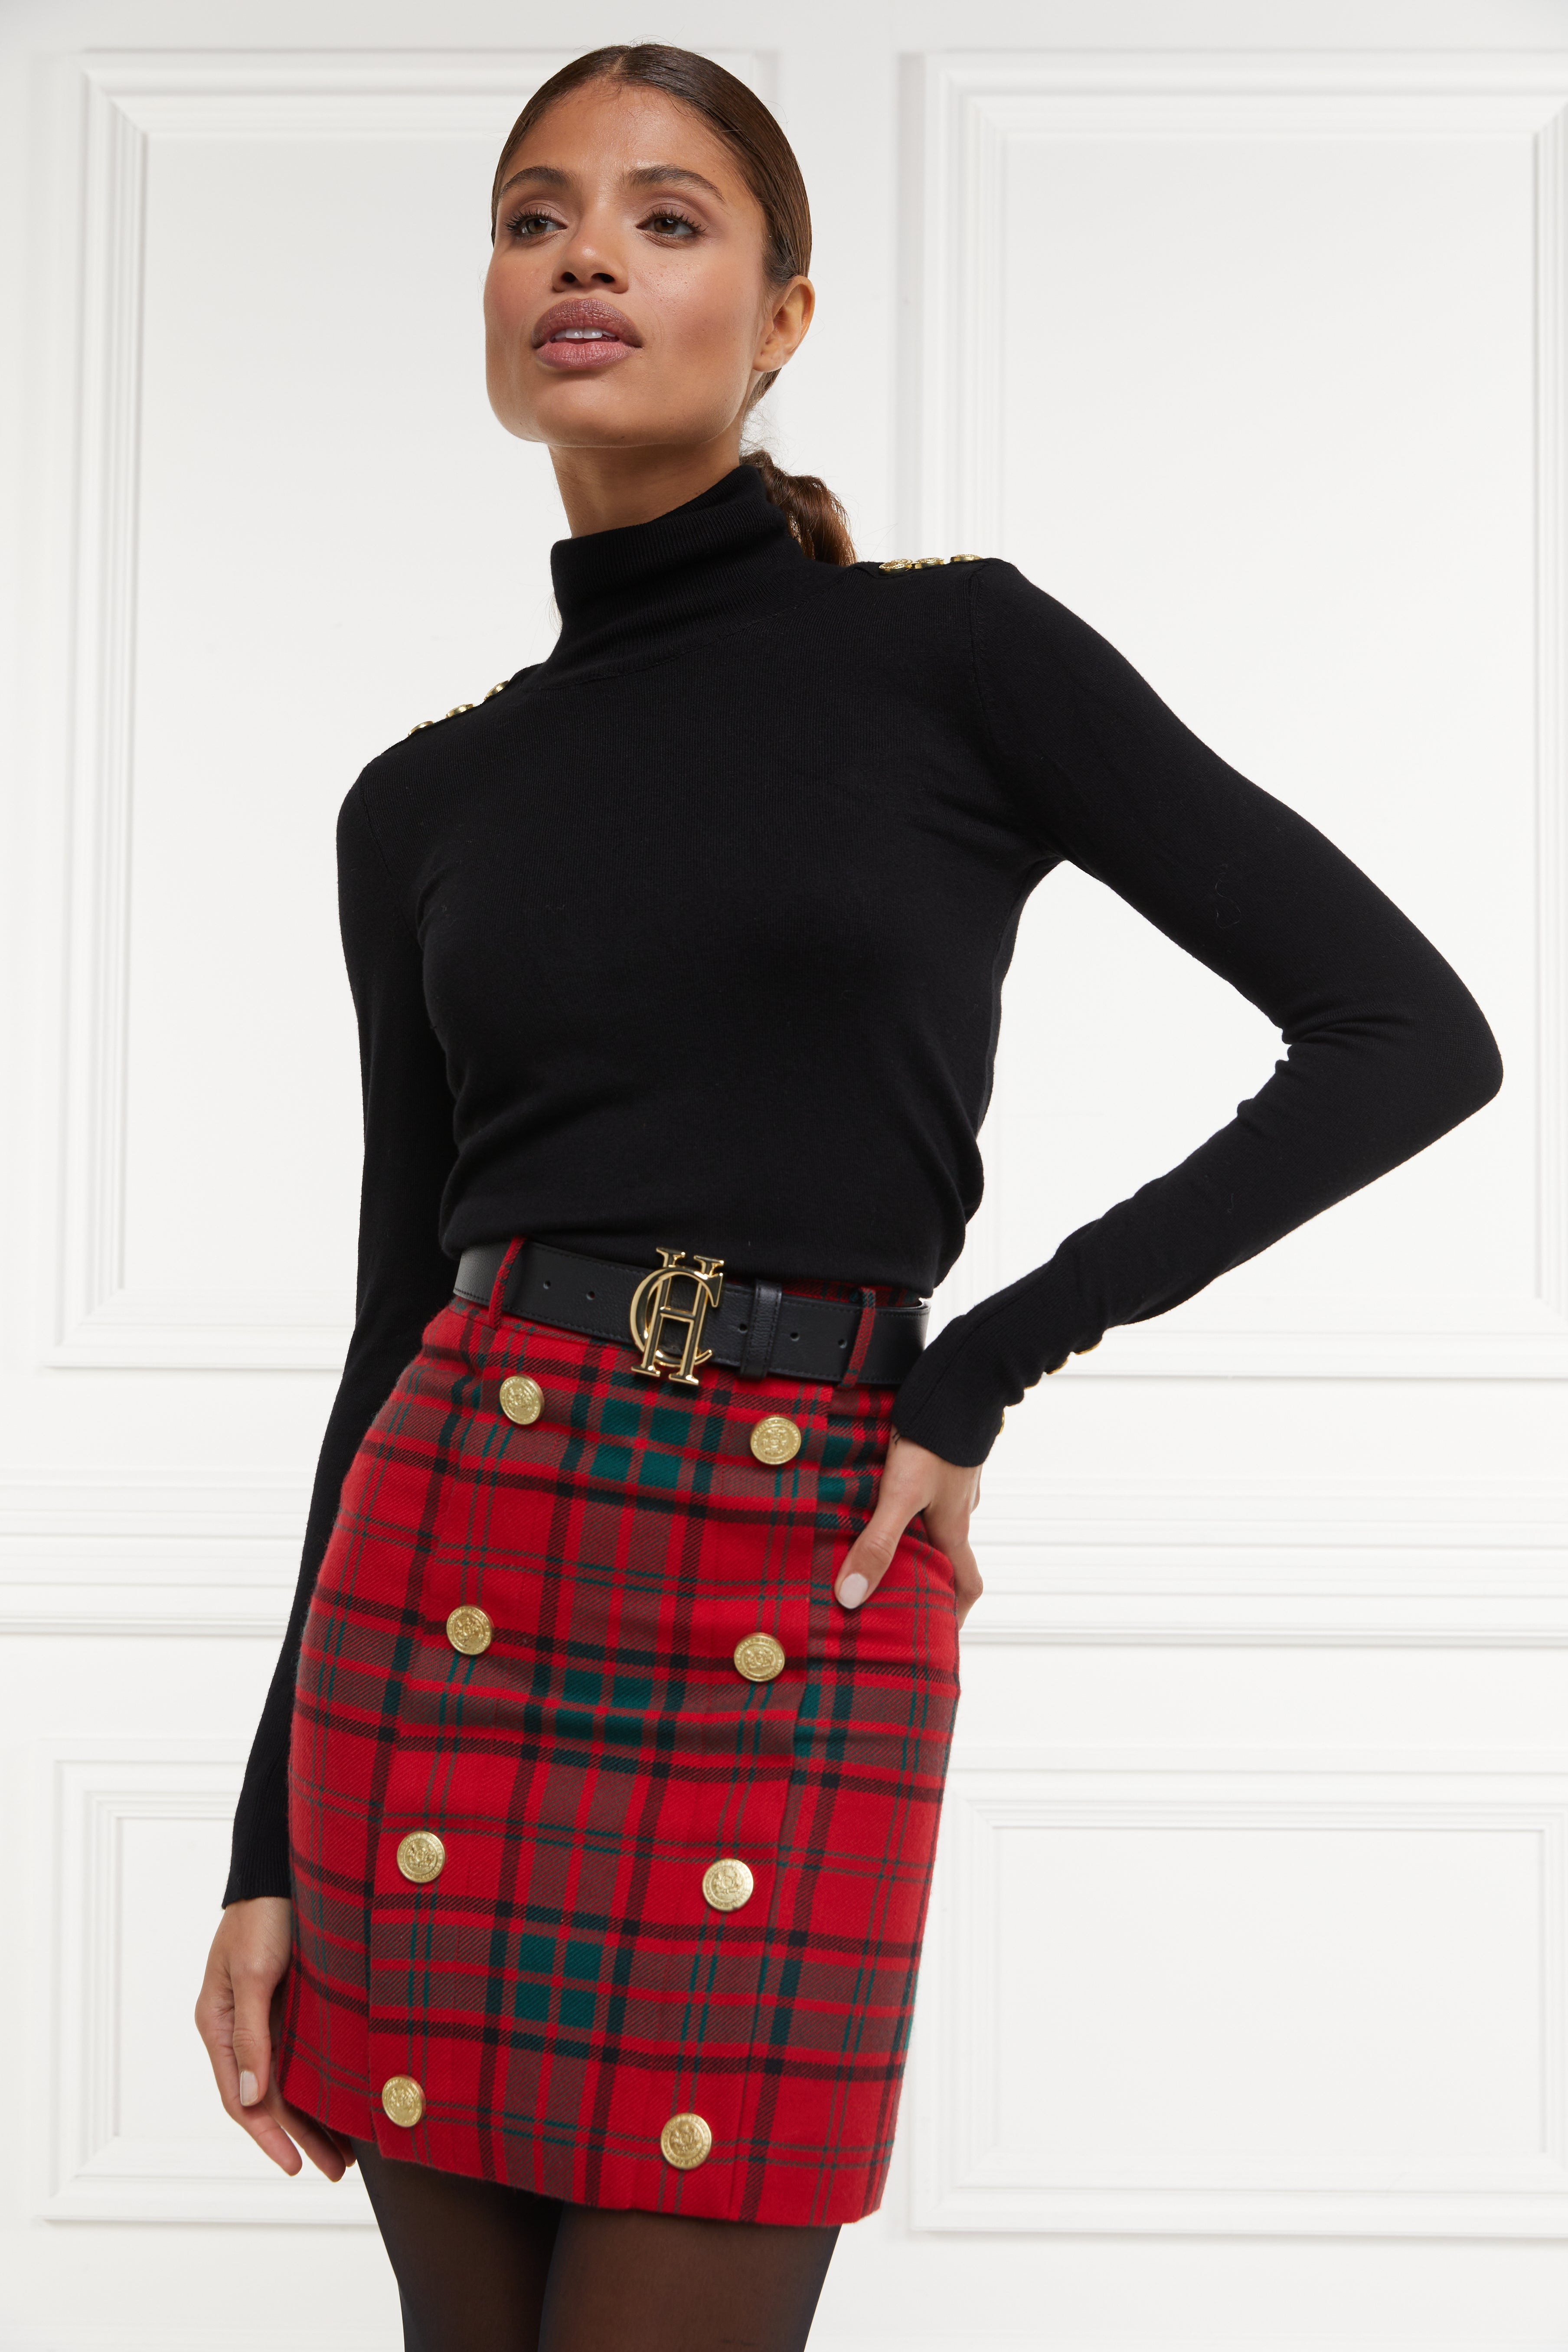 Knightsbridge Skirt (Red Tartan) – Holland Cooper